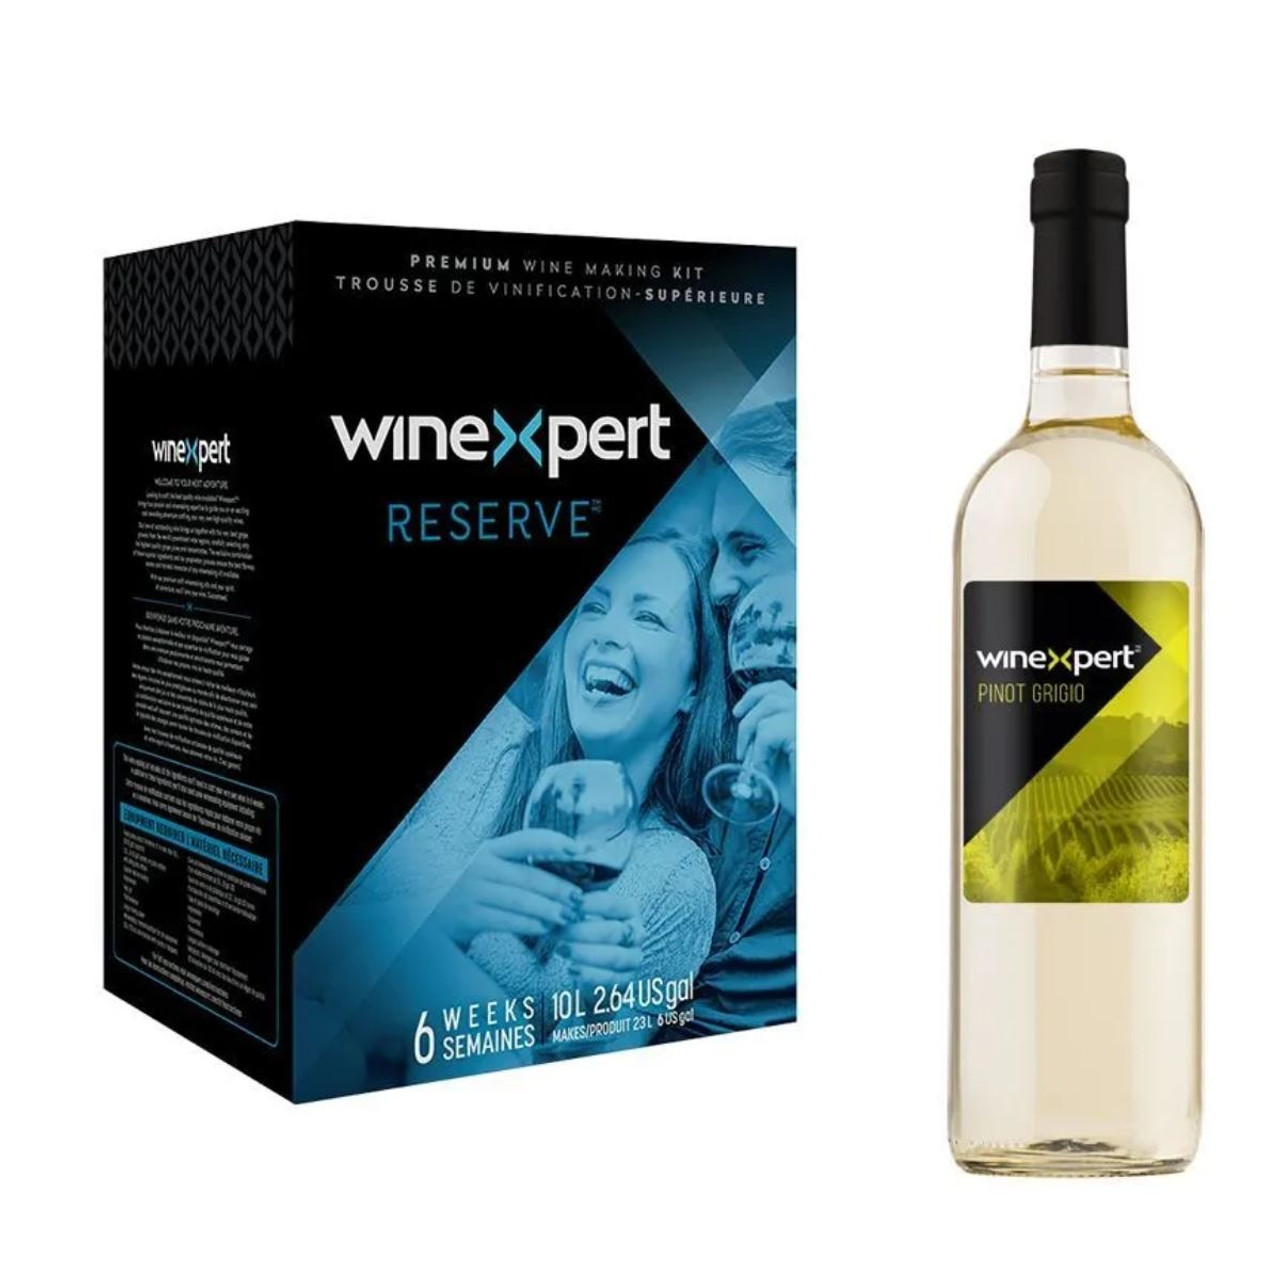 Winexpert Reserve Italian Pinot Grigio Premium 14L White Wine Kit Makes 23L 6wks